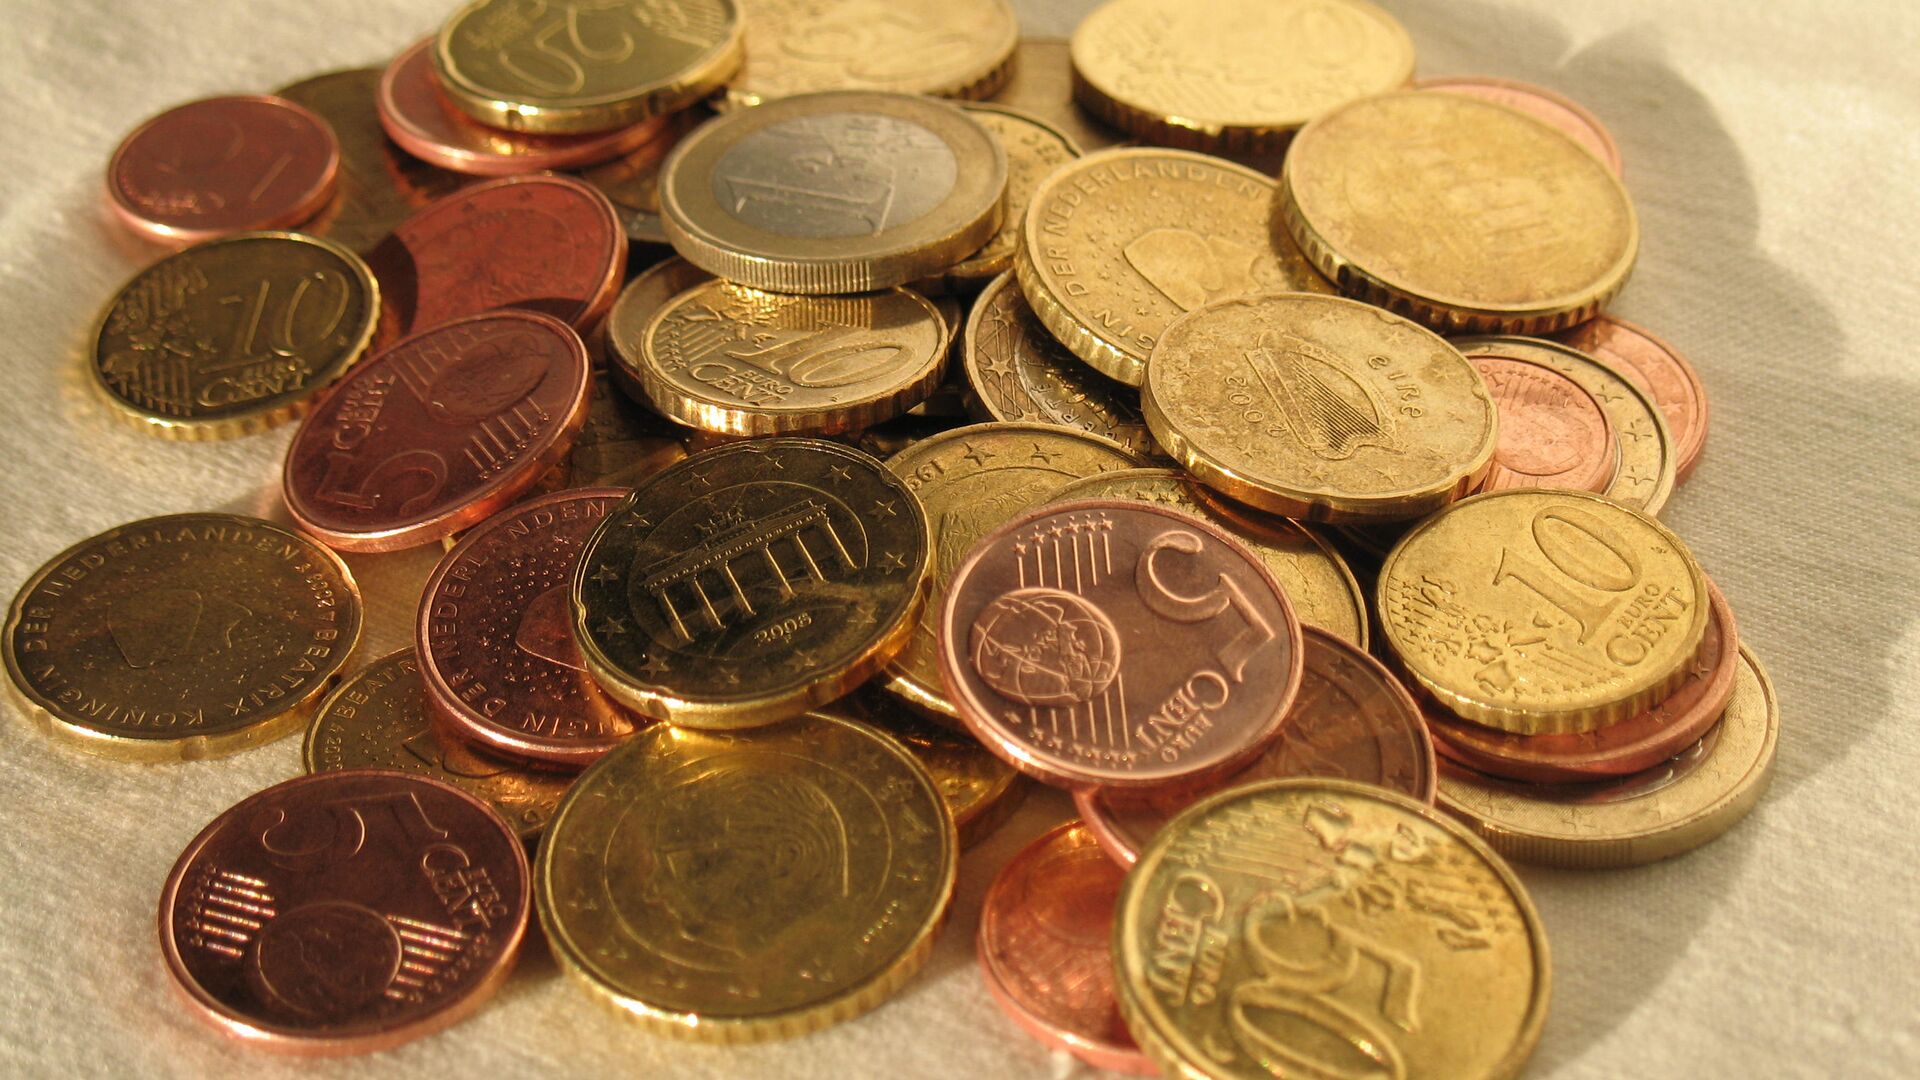 Евро, монеты - Sputnik Латвия, 1920, 14.09.2021